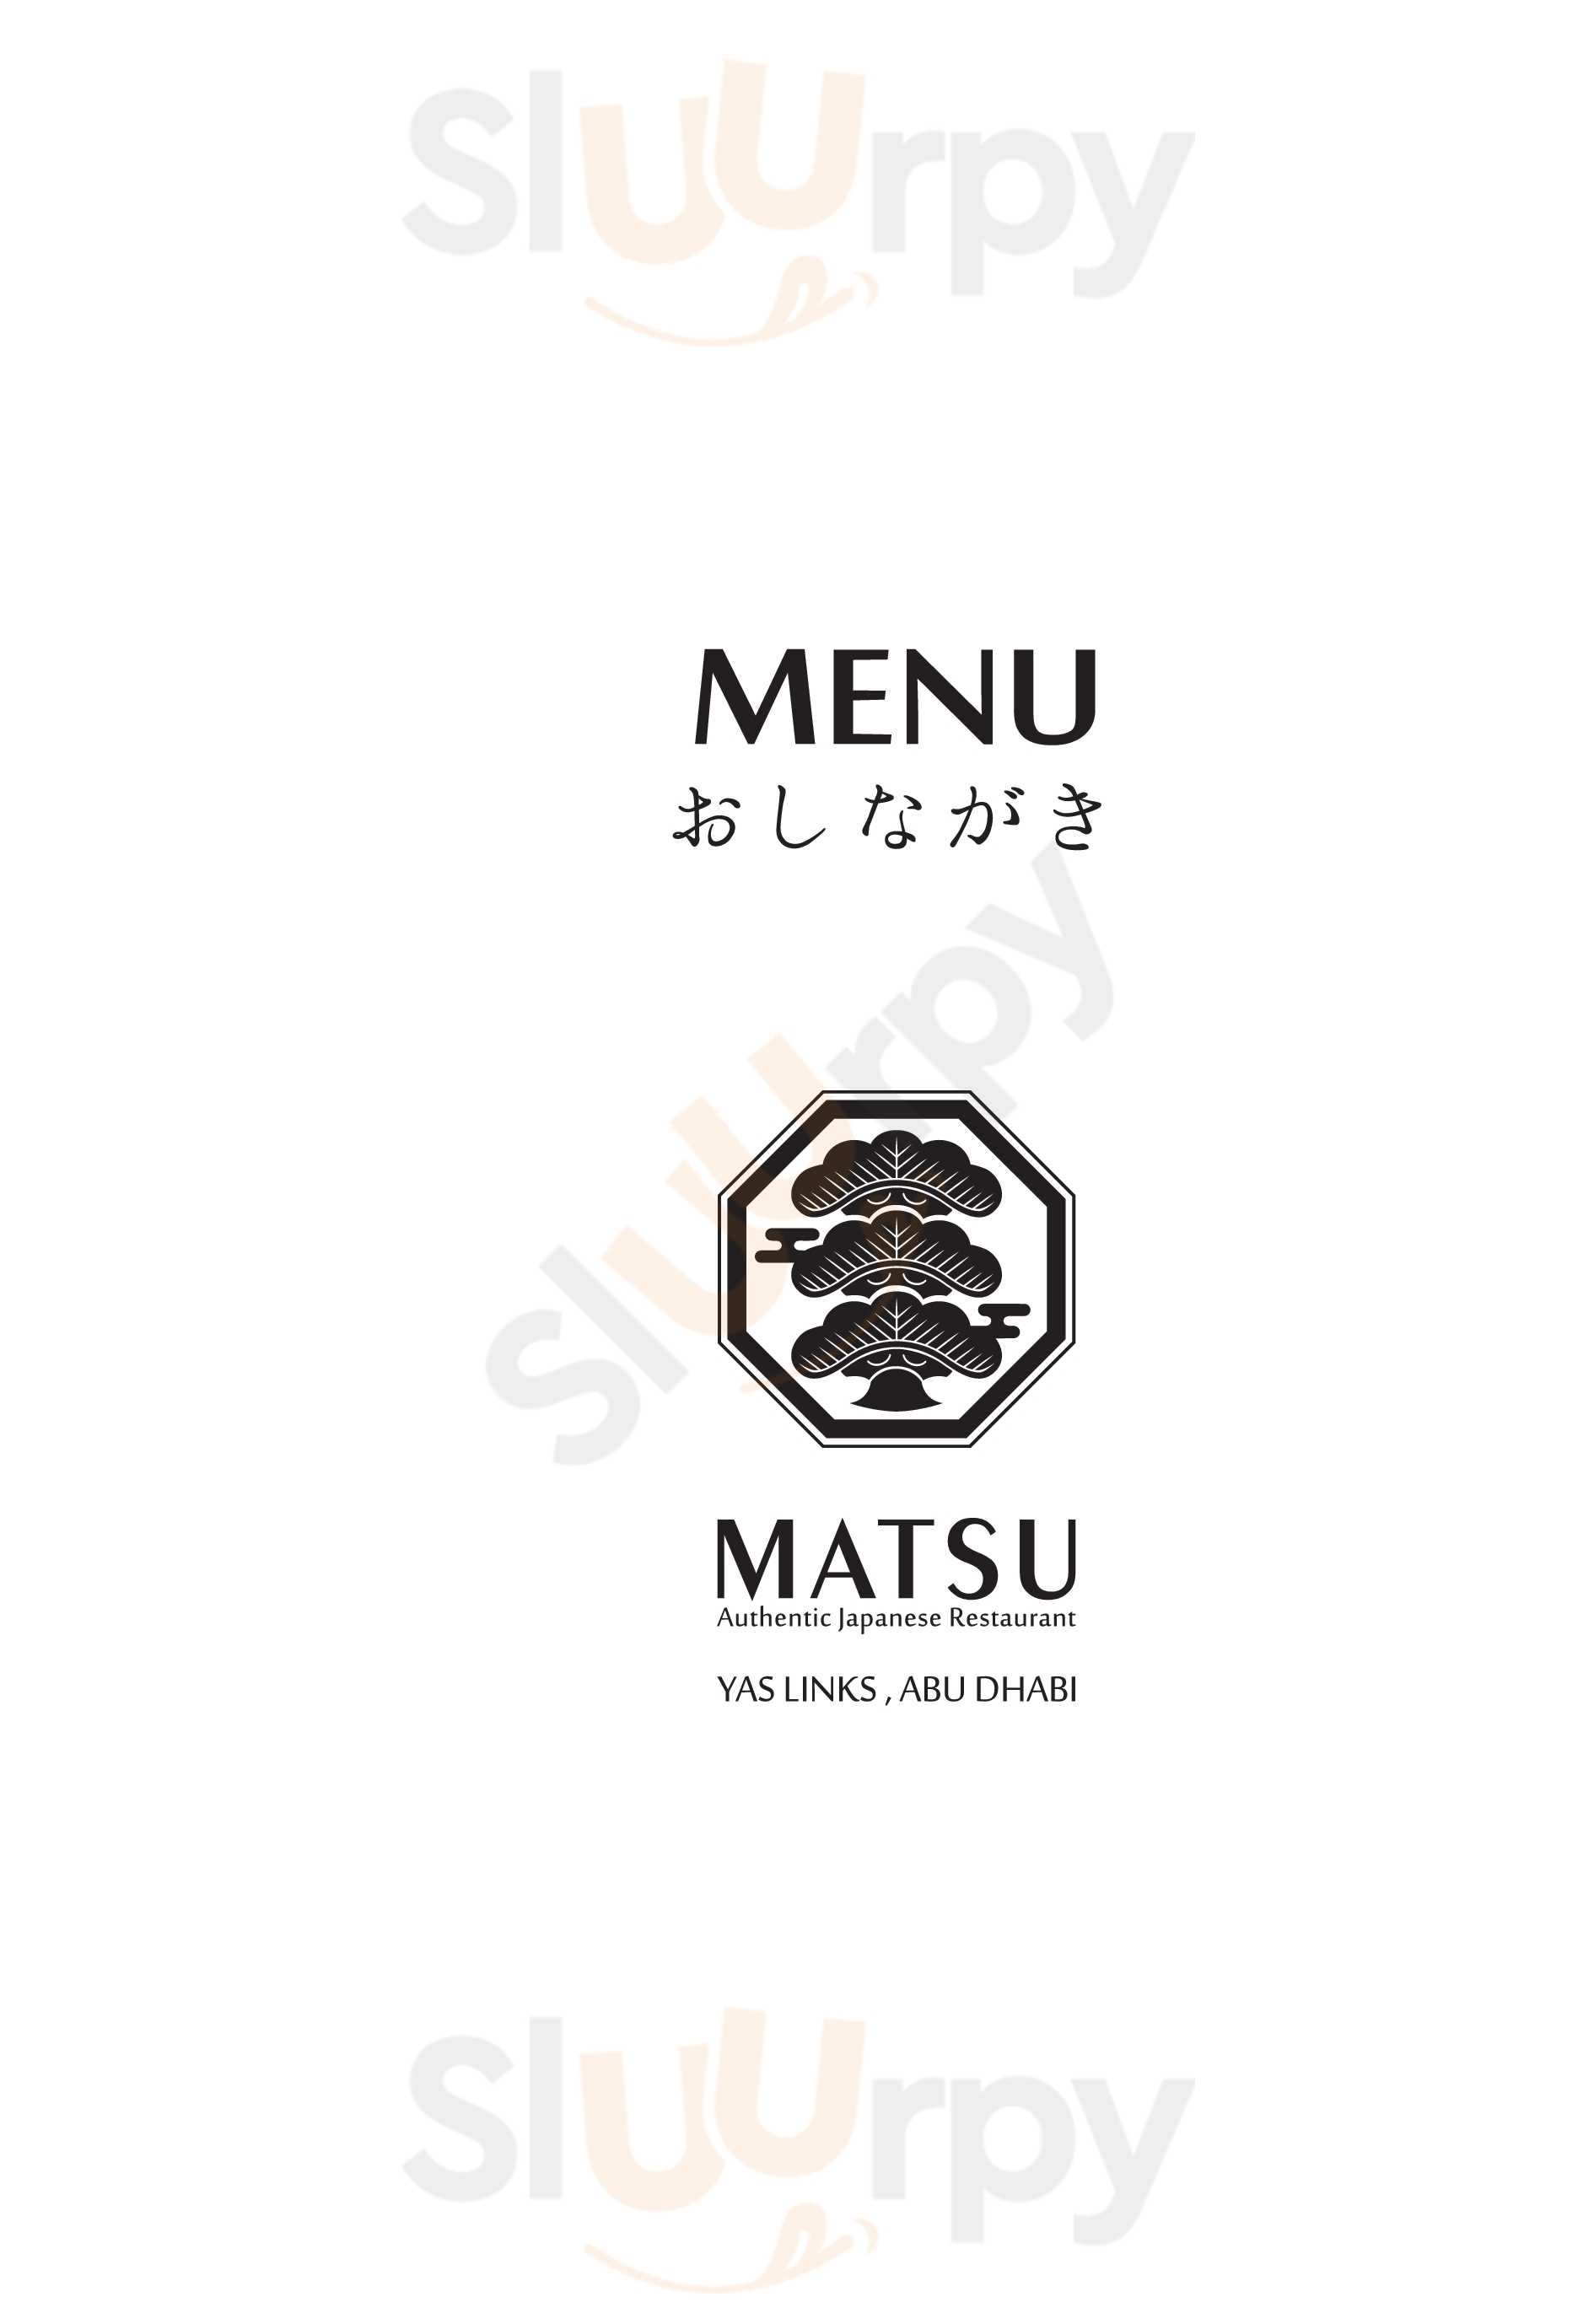 ‪matsu - Japanese Restaurant‬ أبو ظبي Menu - 1